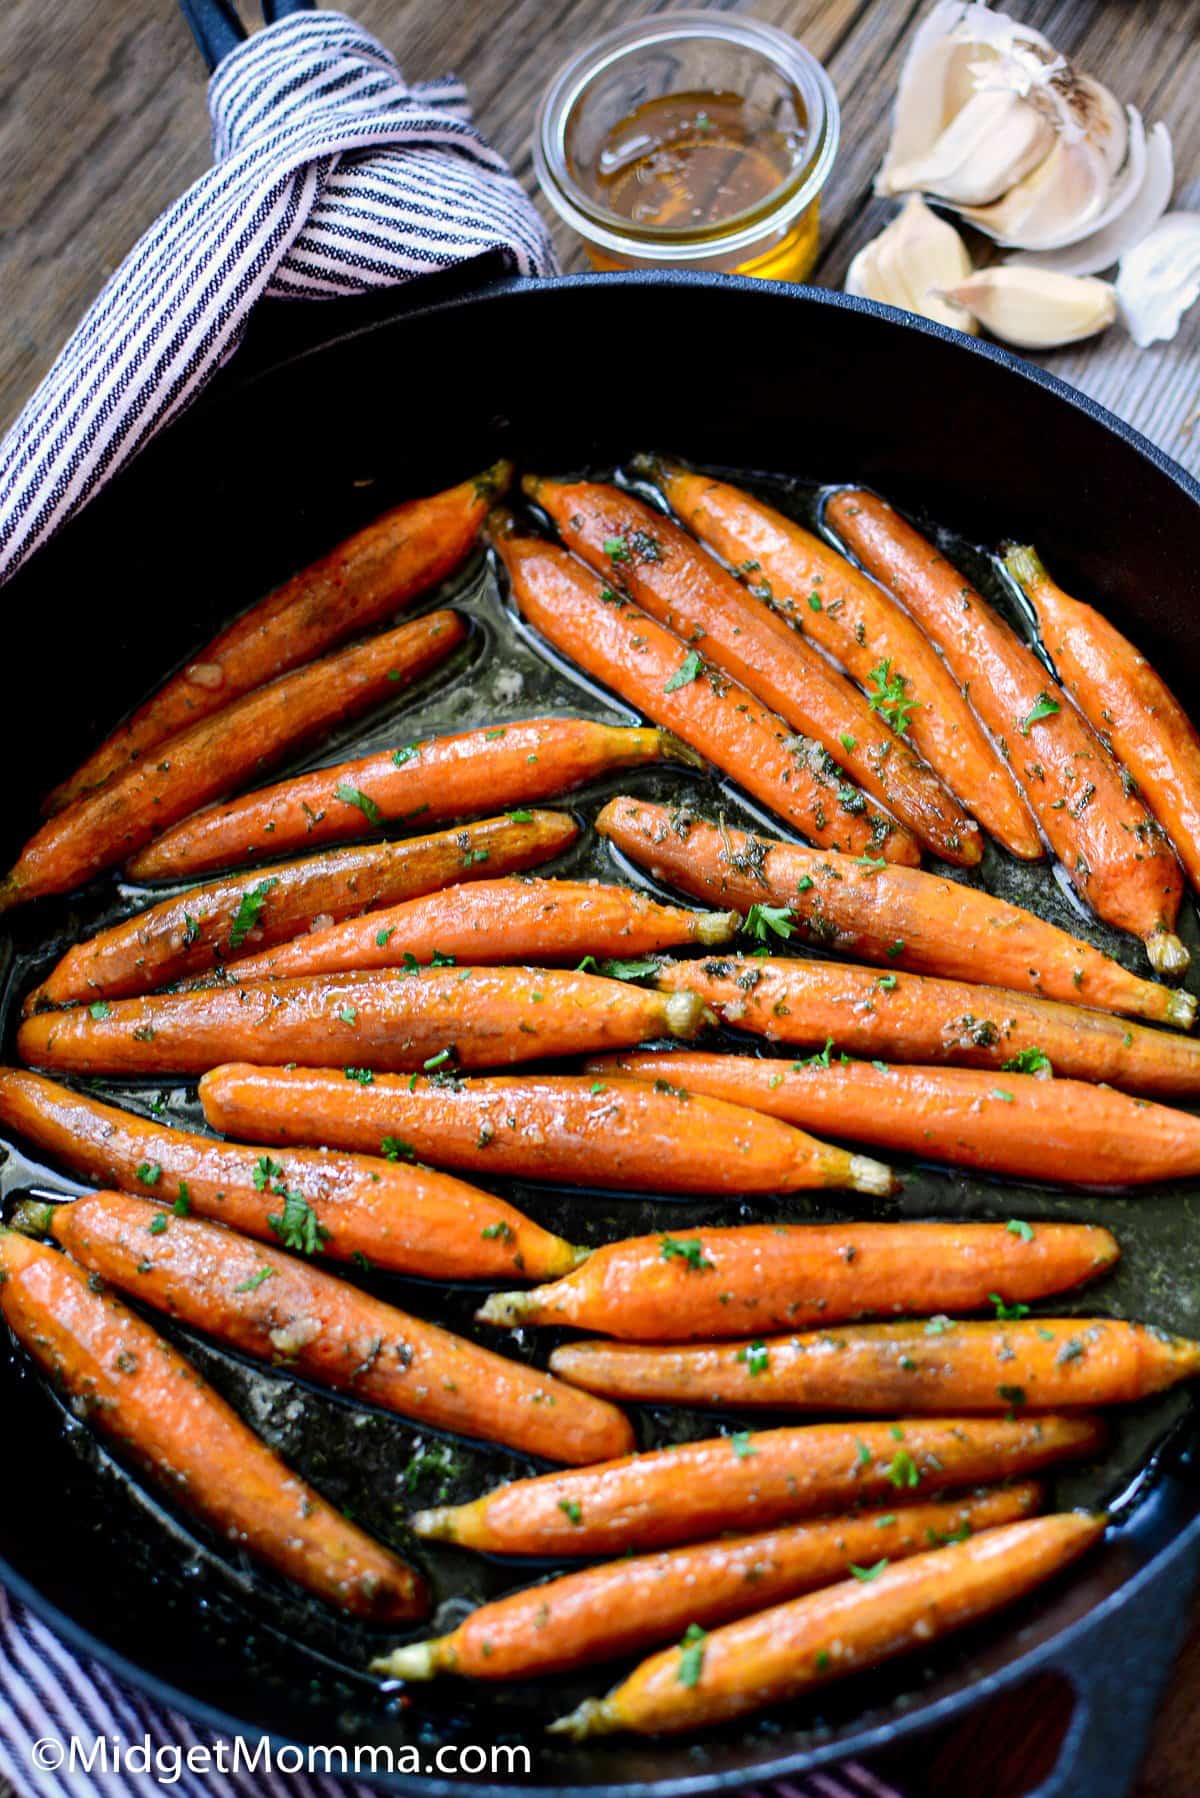 Honey garlic roasted carrots recipe